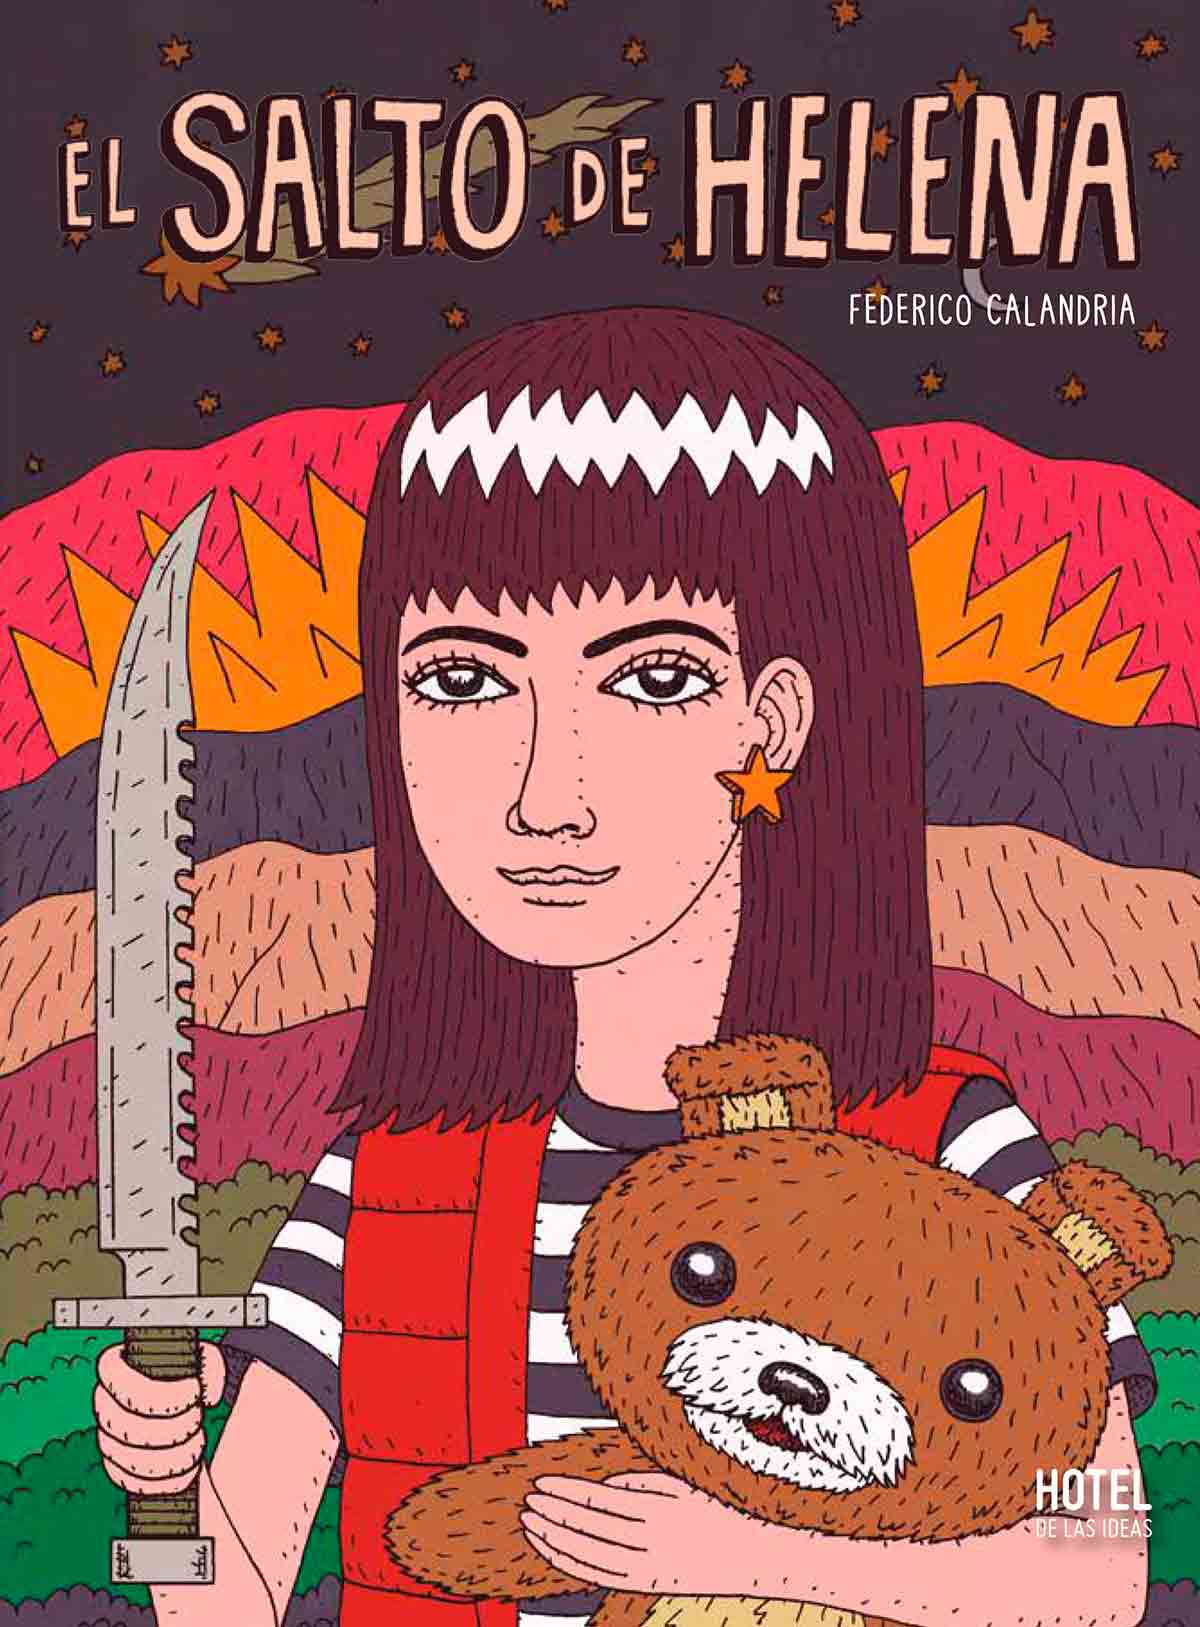 Tapa de "El salto de Helena", novela gráfica de Federico Calandria